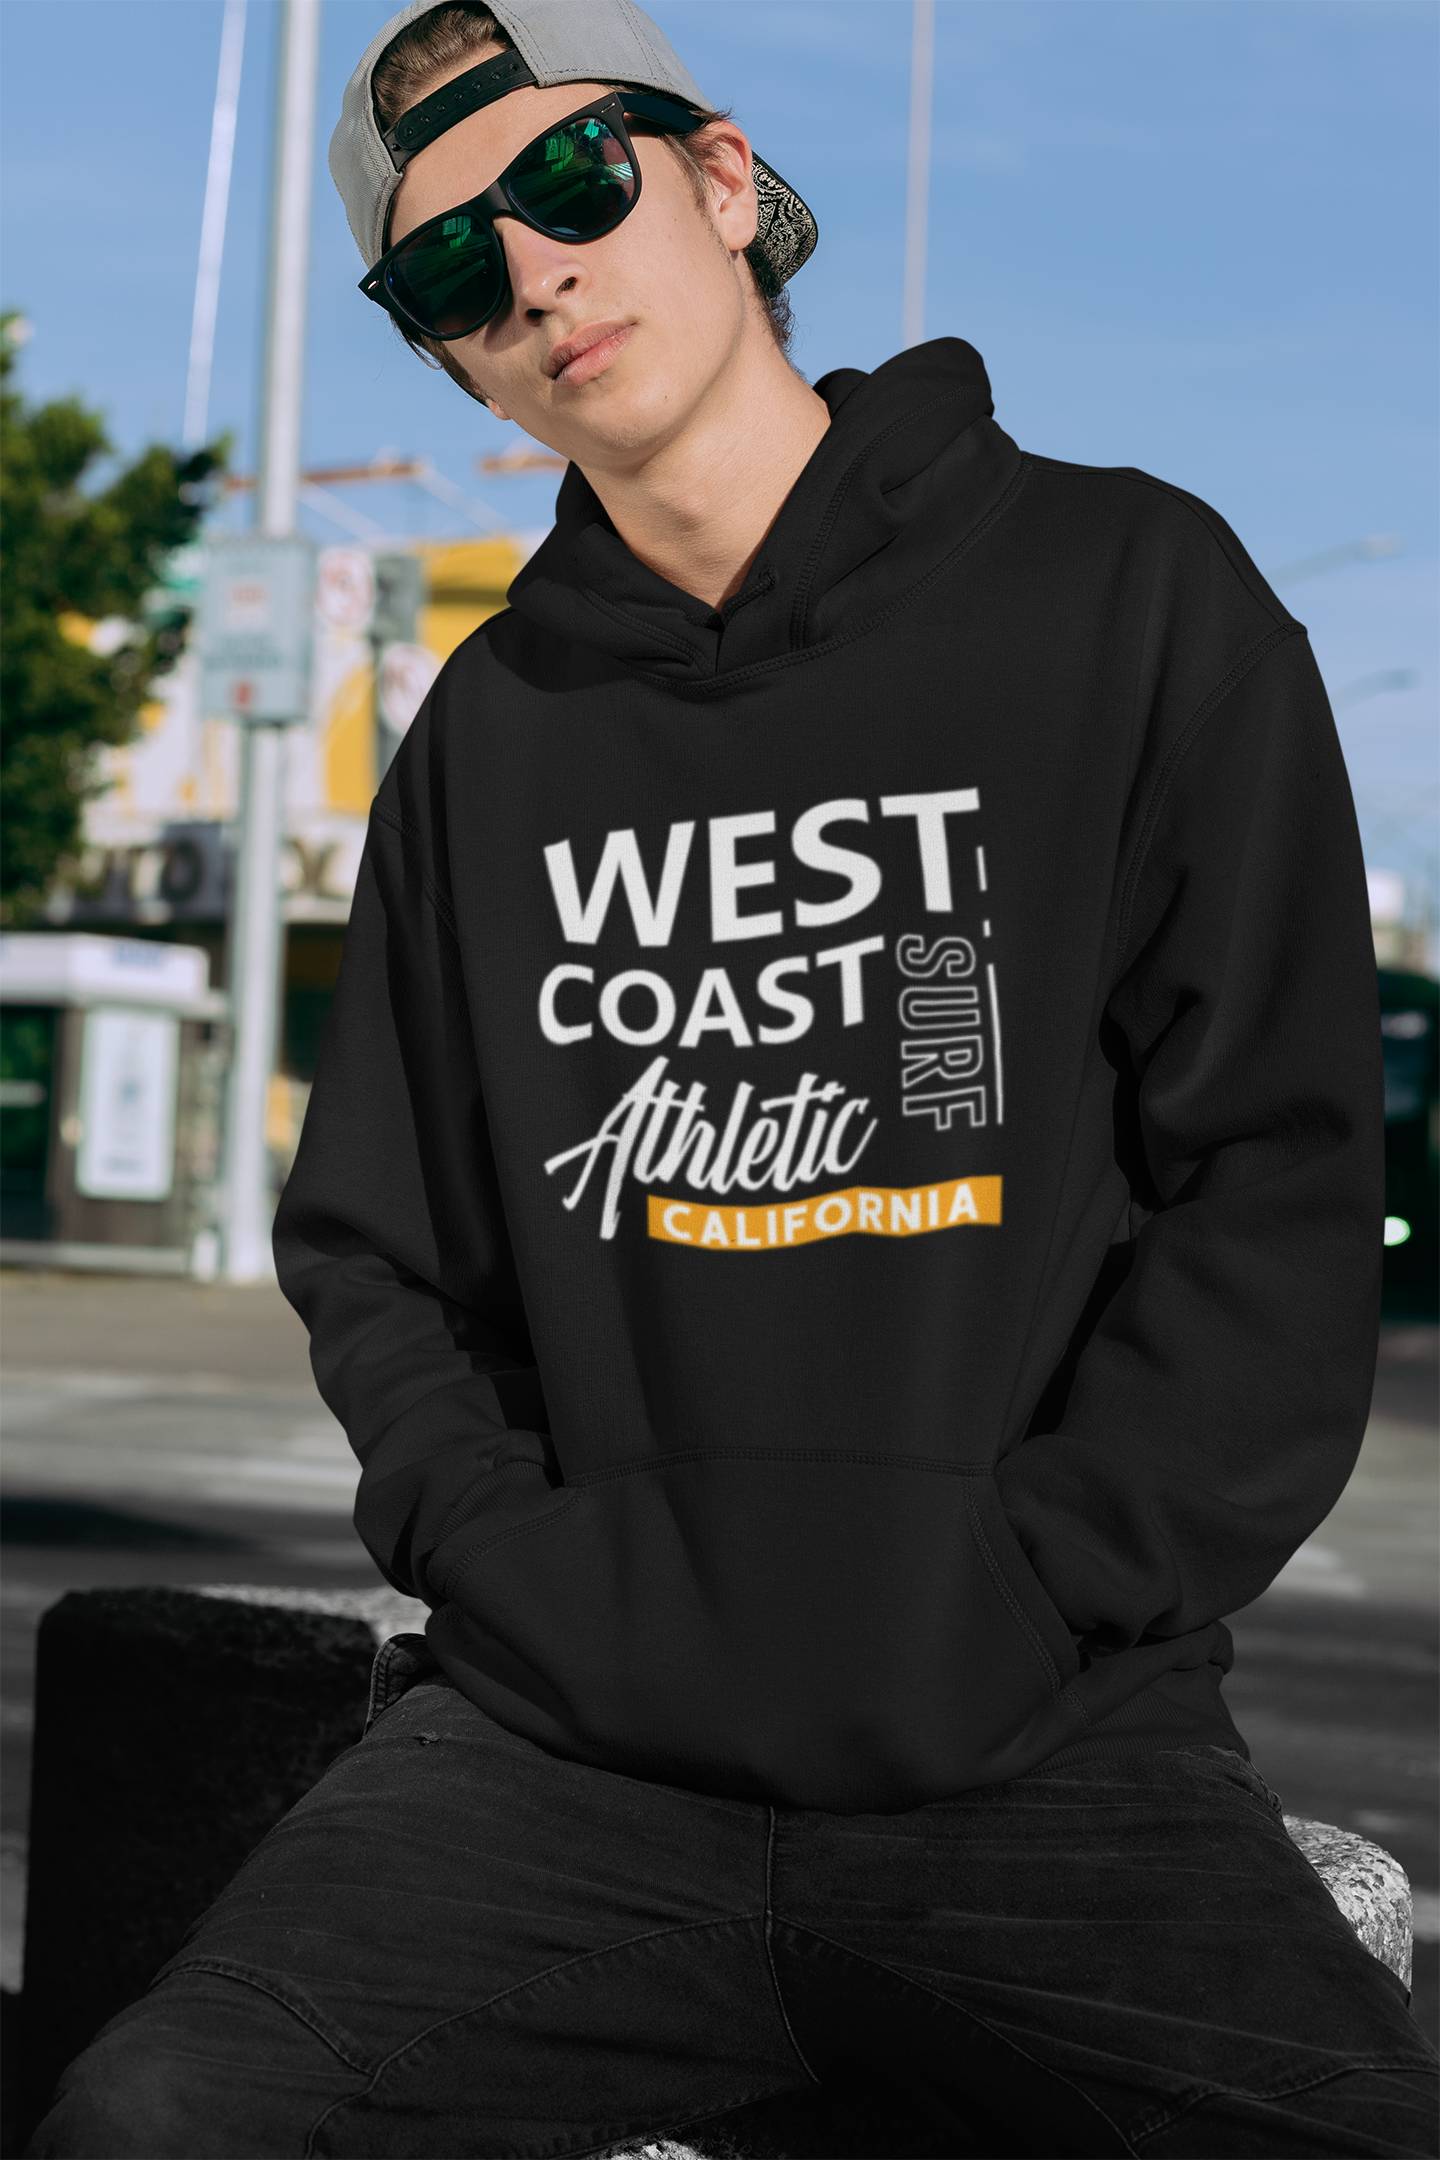 Stylish Hoodies for Men | West Coast Athletic Activewear / Athleisure black